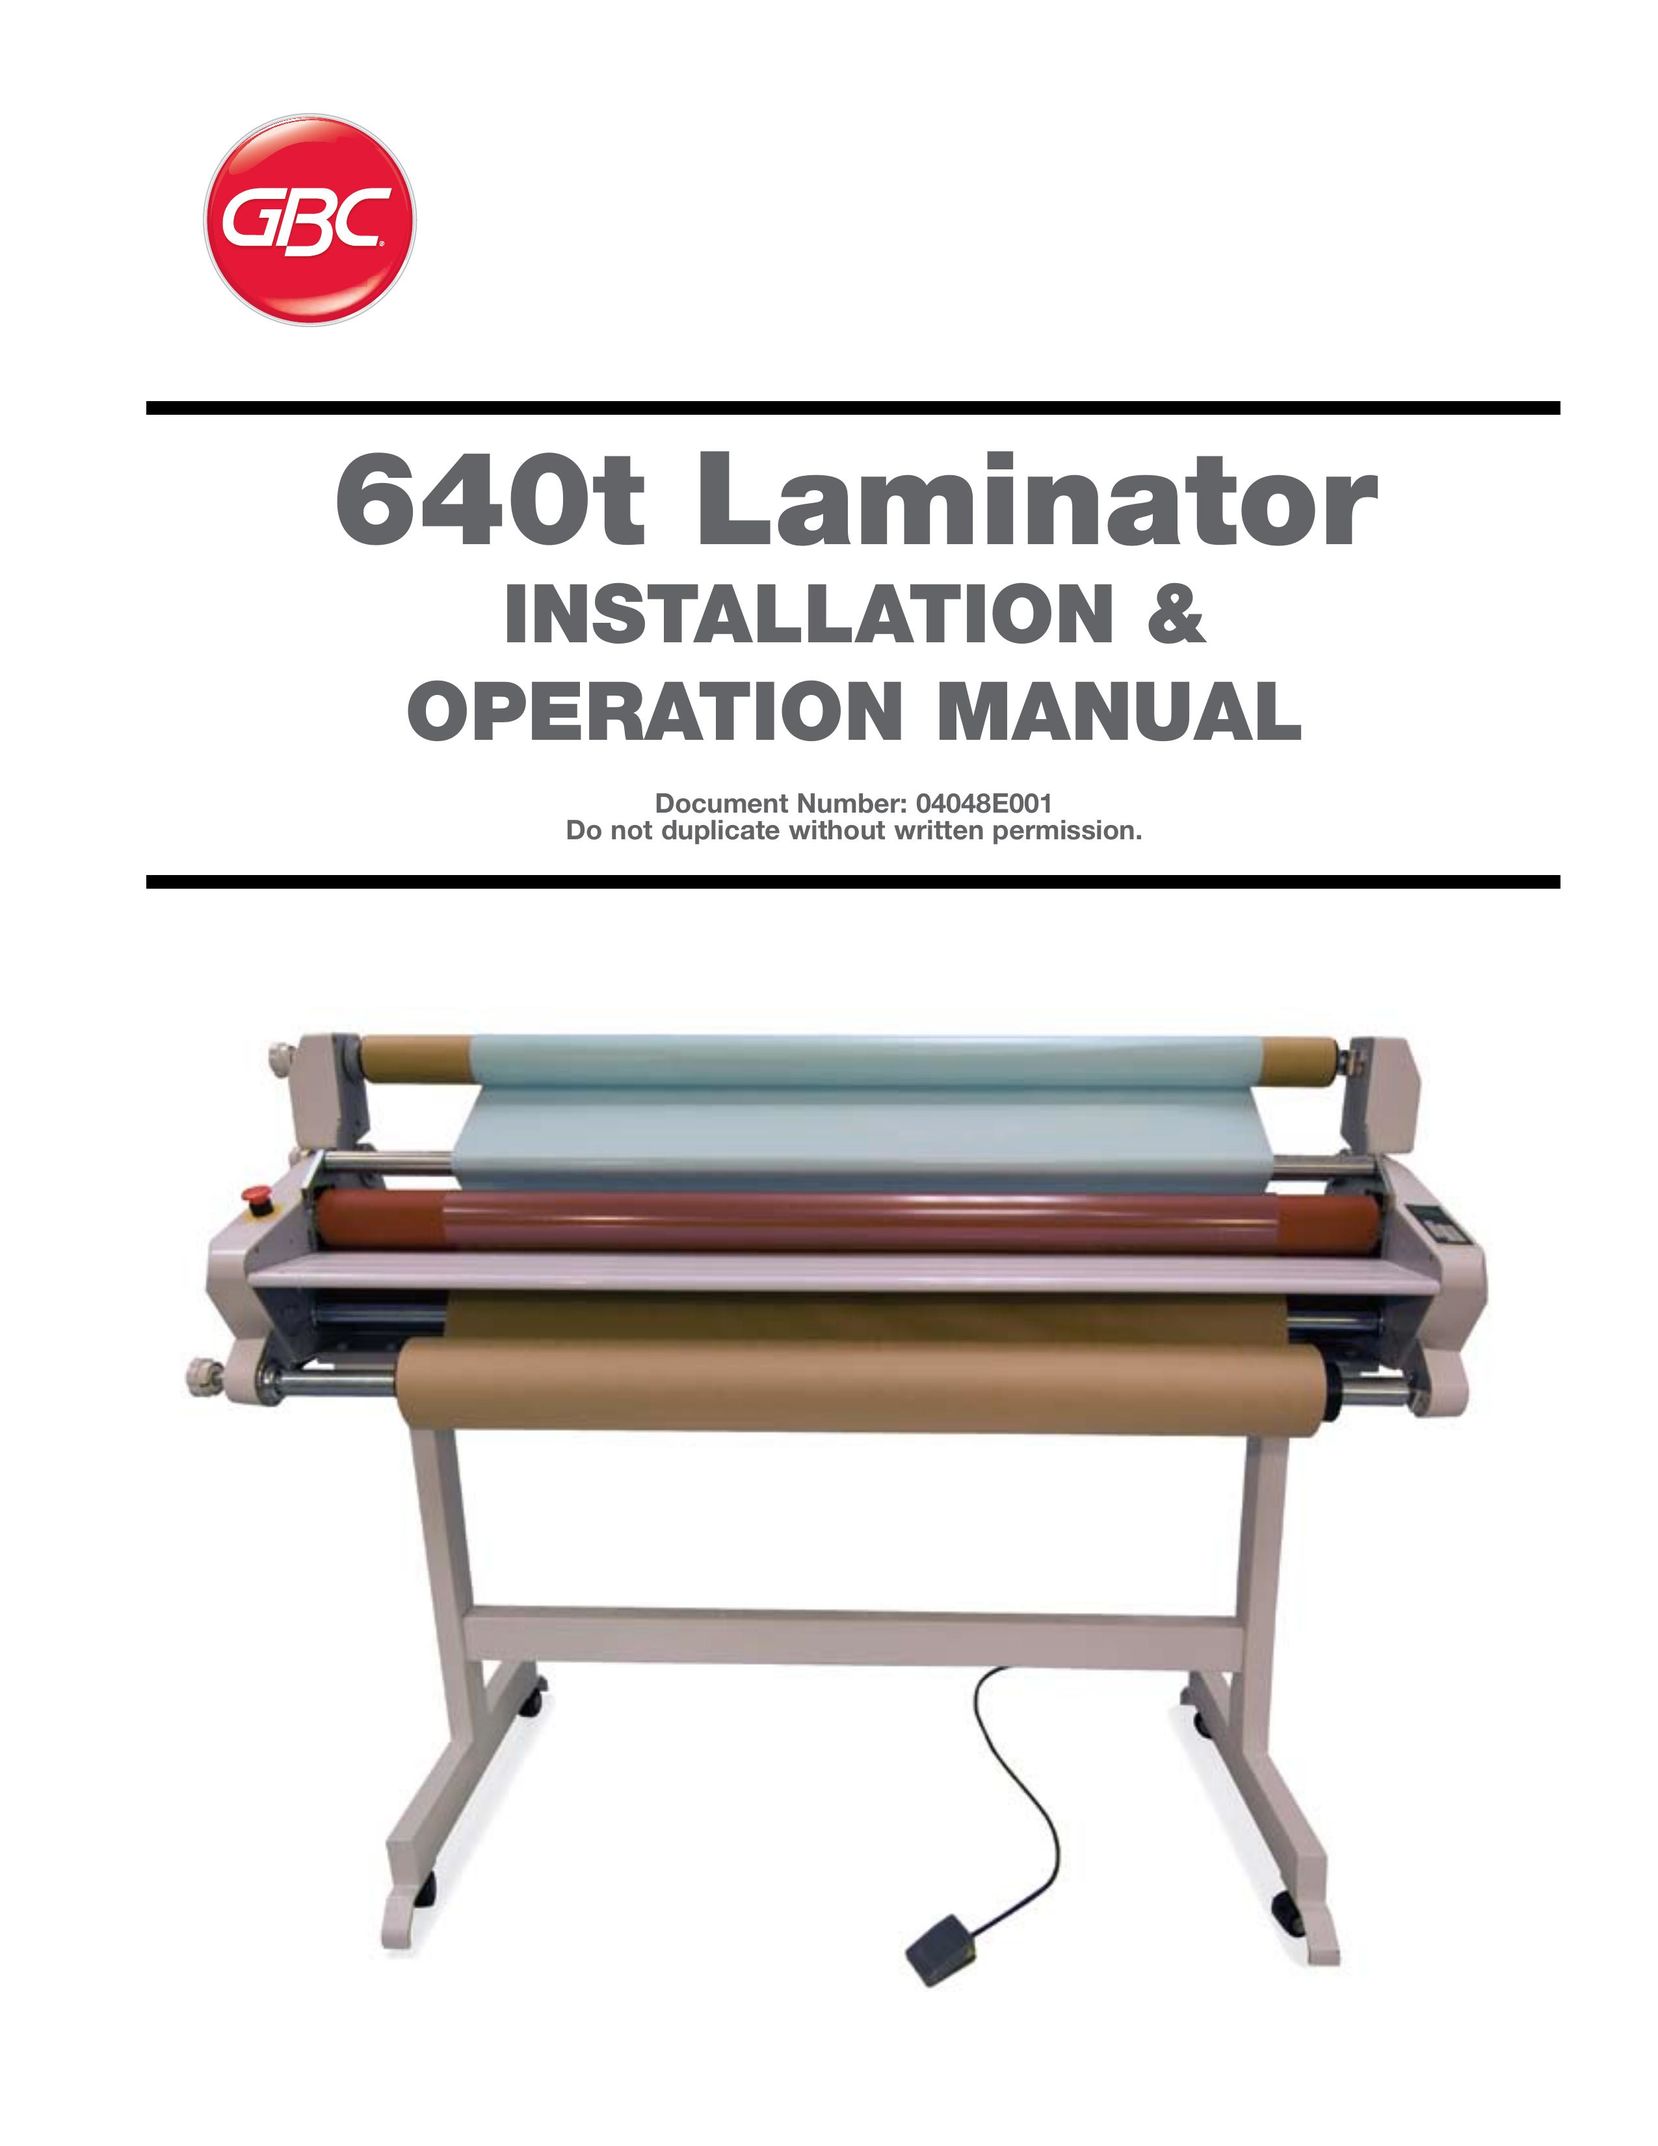 GBC 640T Laminator User Manual